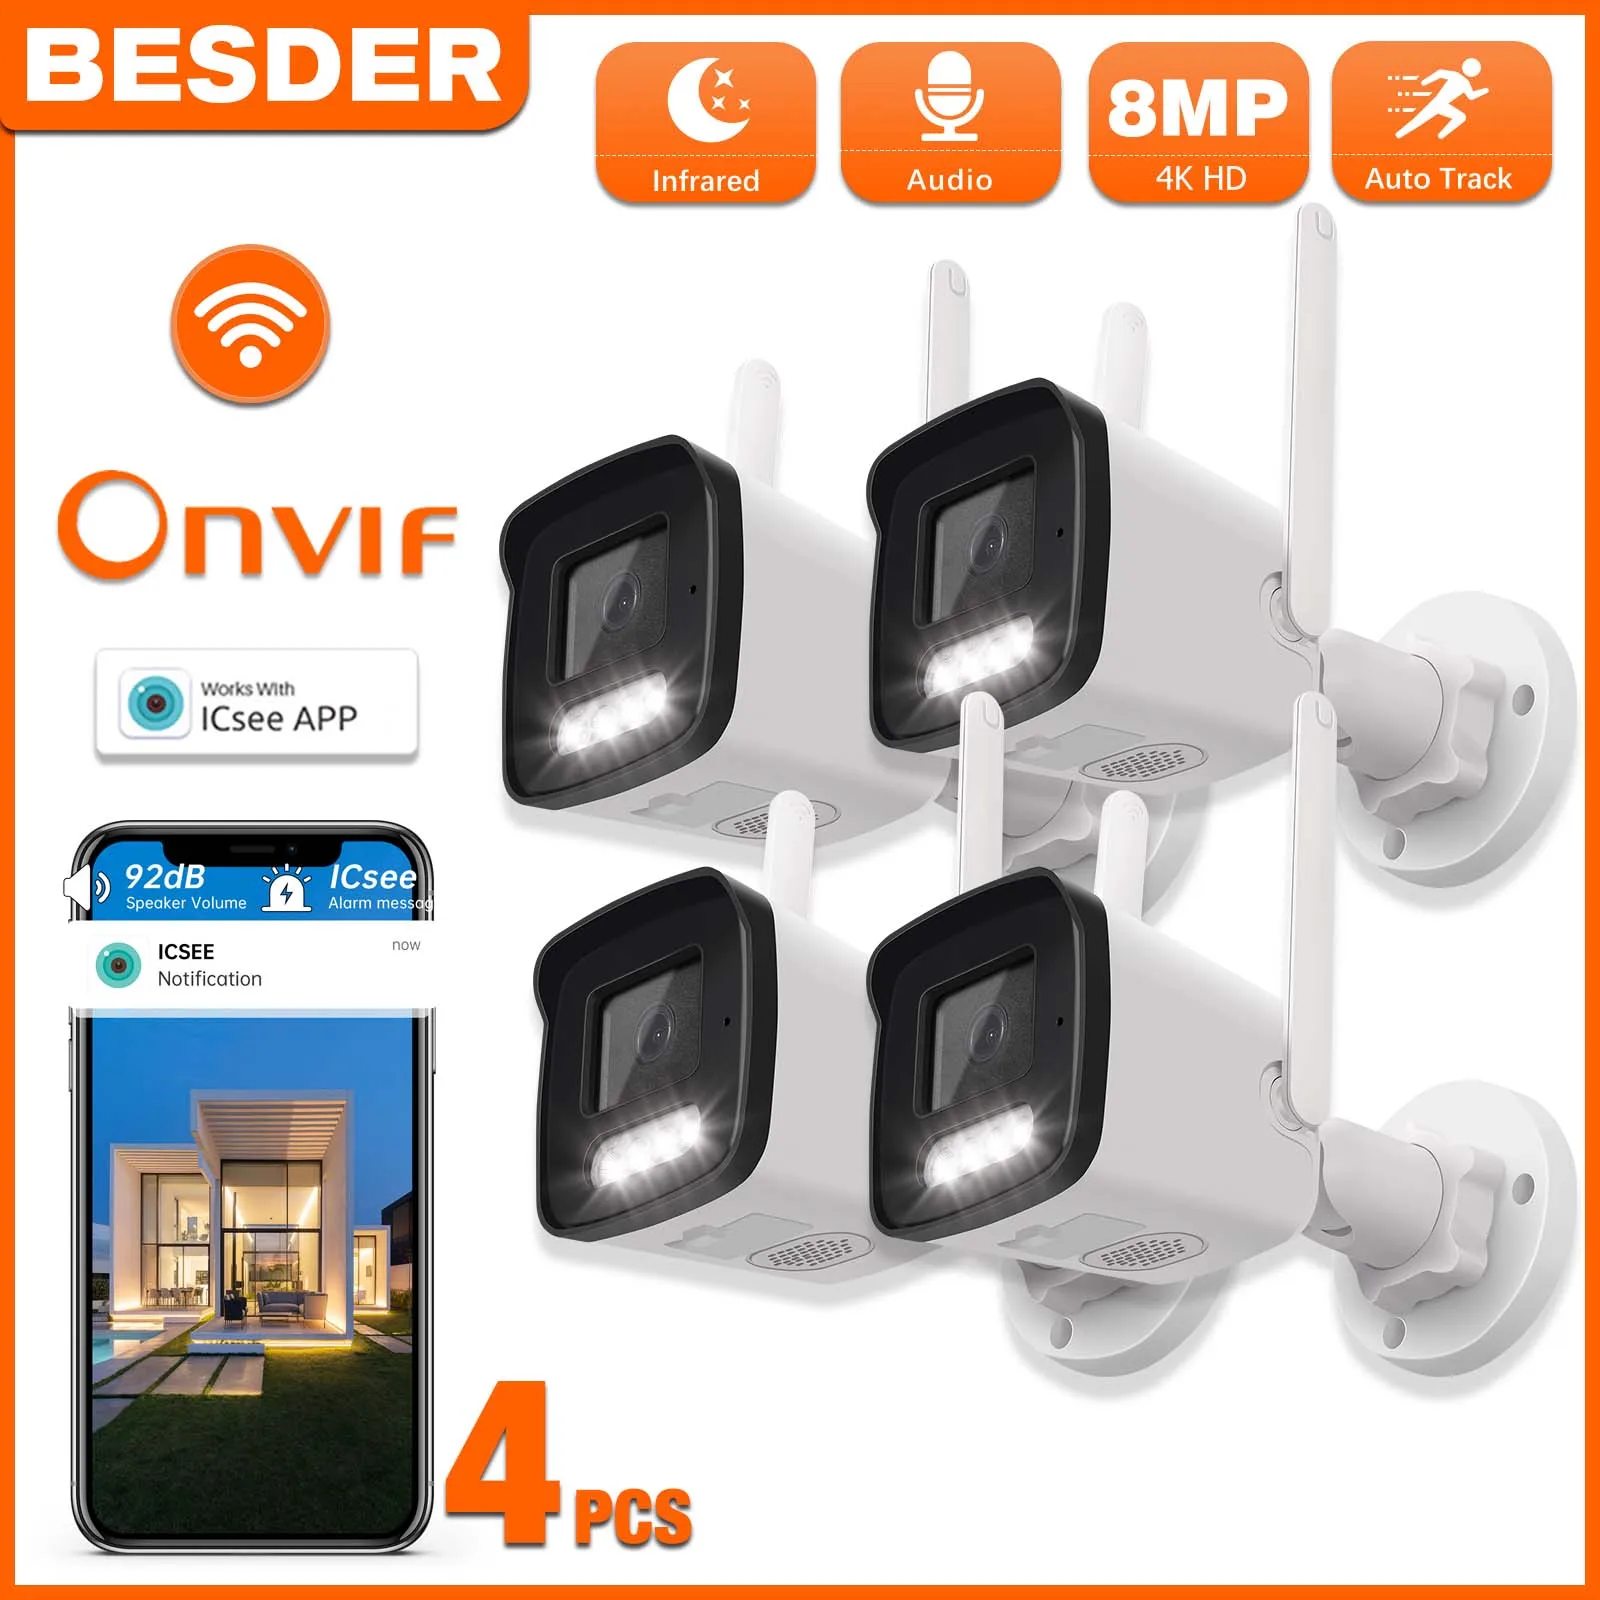 BESDER 8MP Audio IP Camera Wifi Wireless AI Human Detect iCSee 2K CCTV Bullet Outdoor Surveillance Camera Security Protection